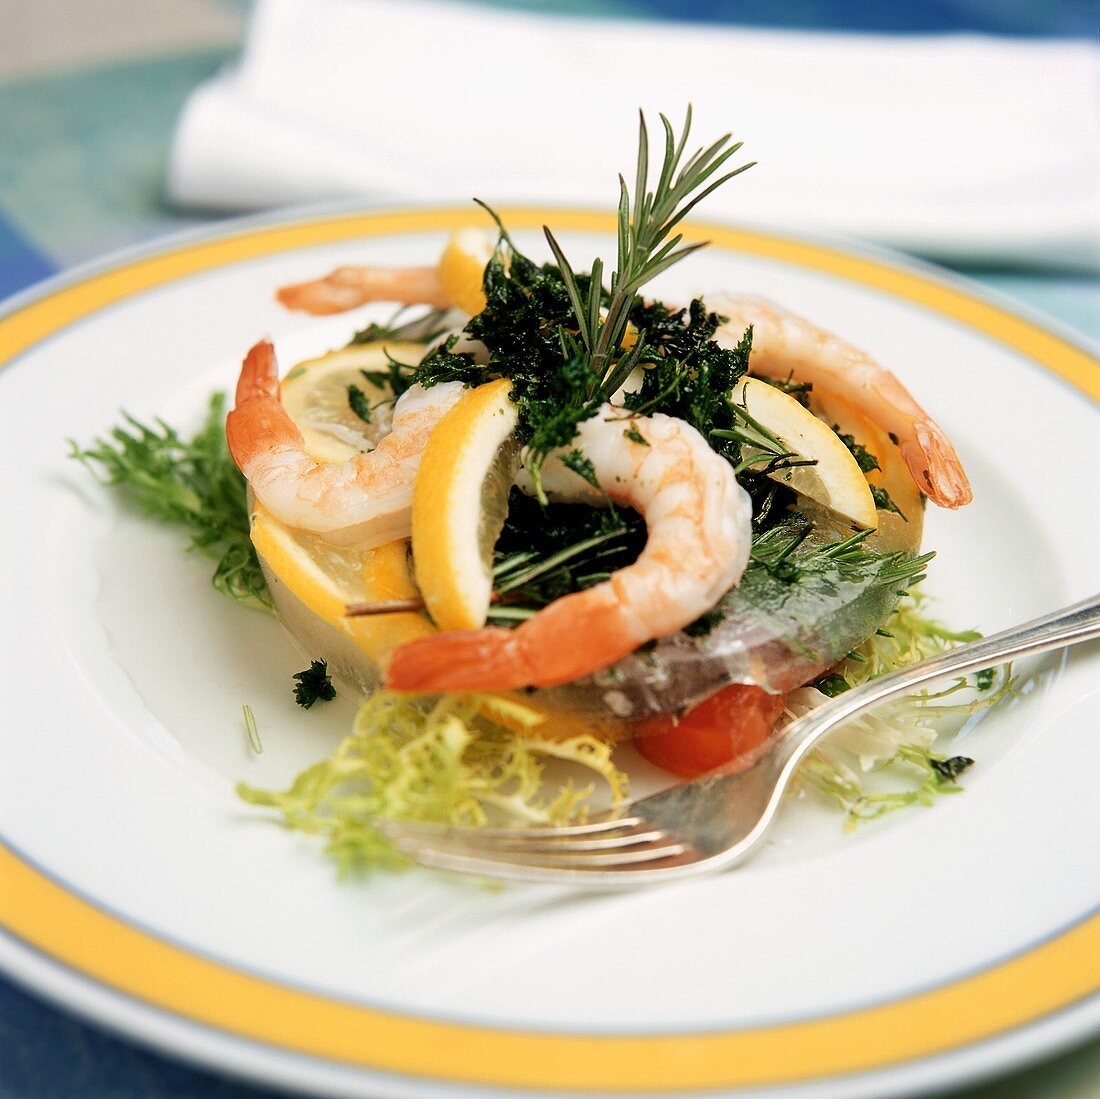 Shrimp cocktail with salad garnish